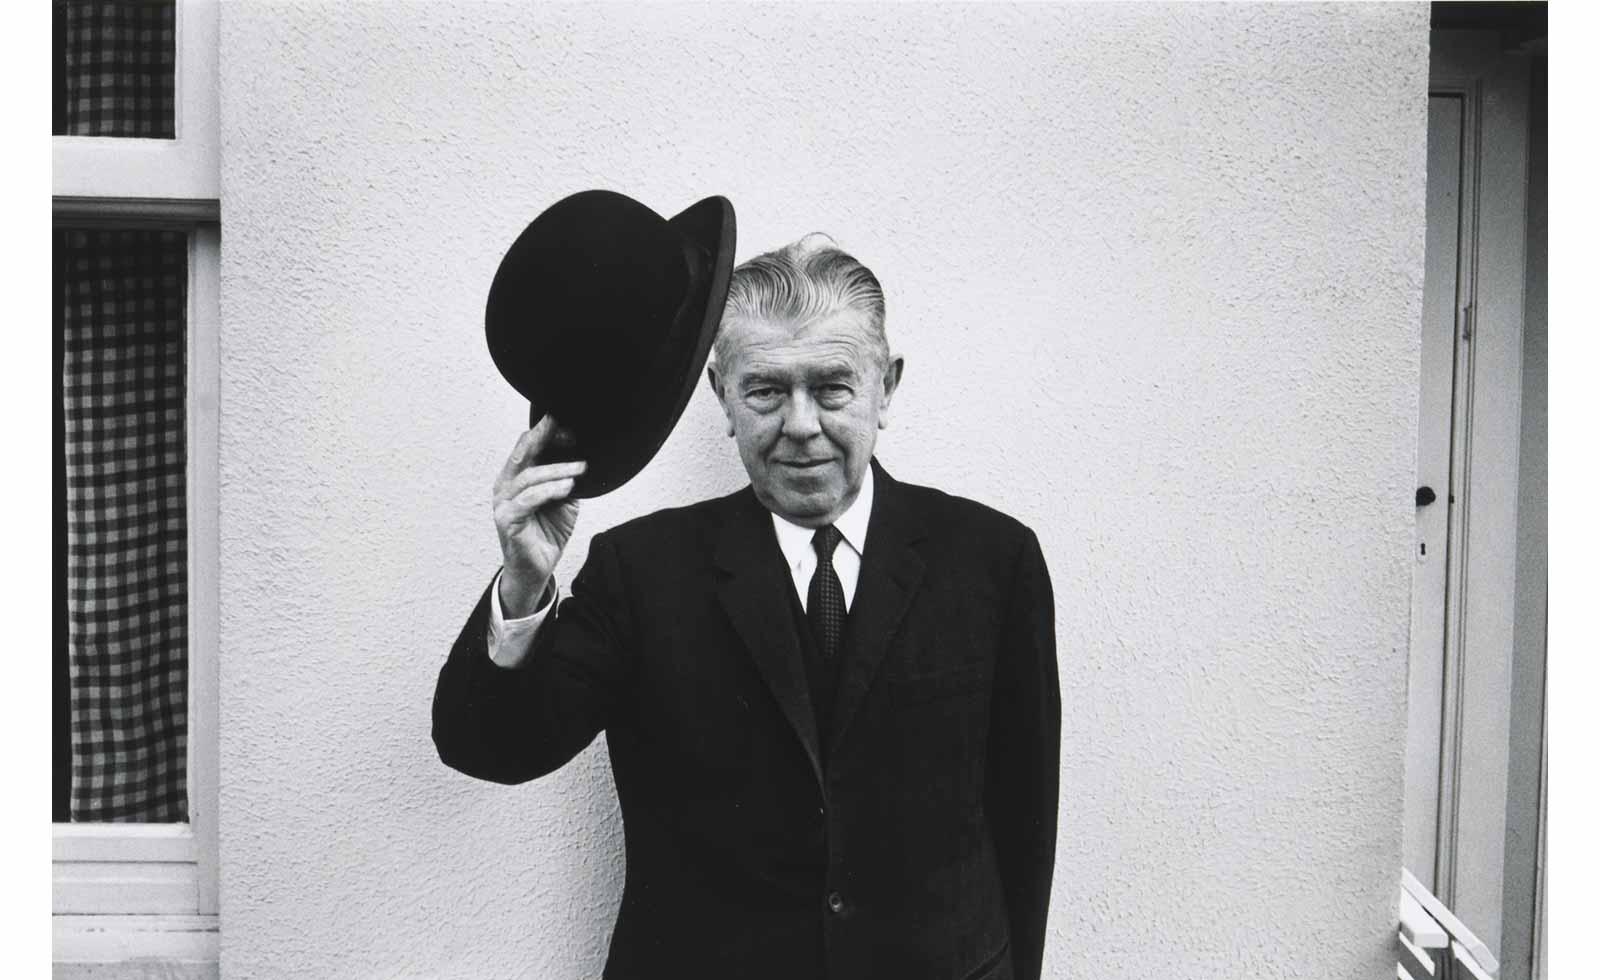 Duane Michals, Magritte Tipping Hat, 1965. Gelatin silver print. 